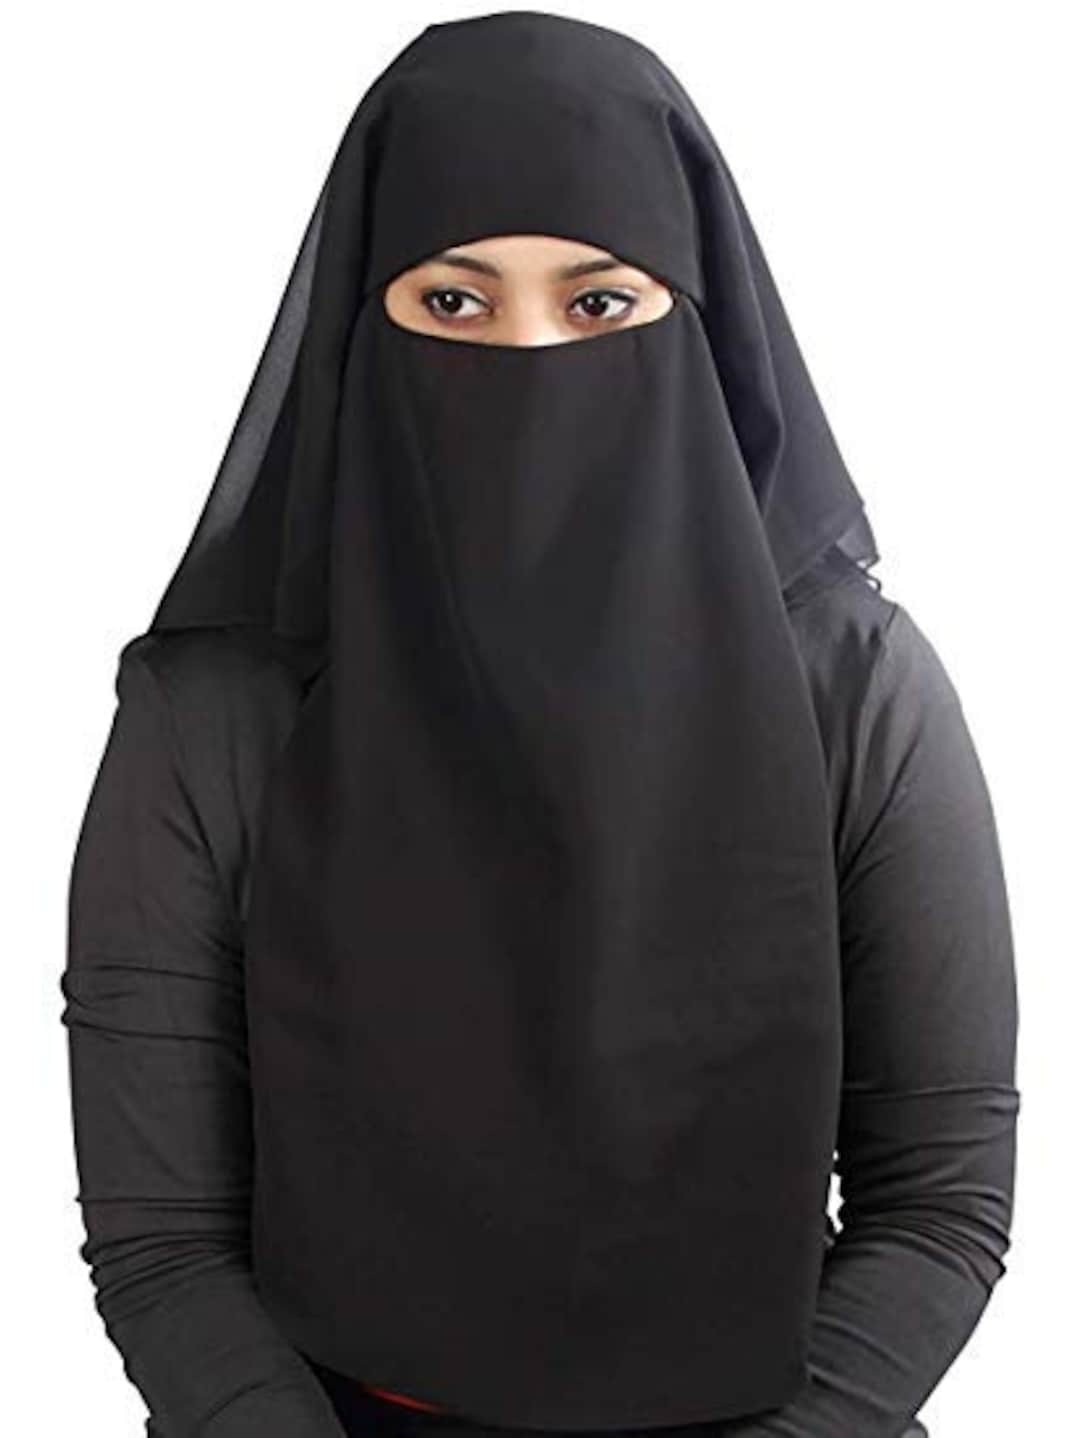 Layer Niqab Abaya Jilbab Khimar Burqa Head Scarf Face Cover photo